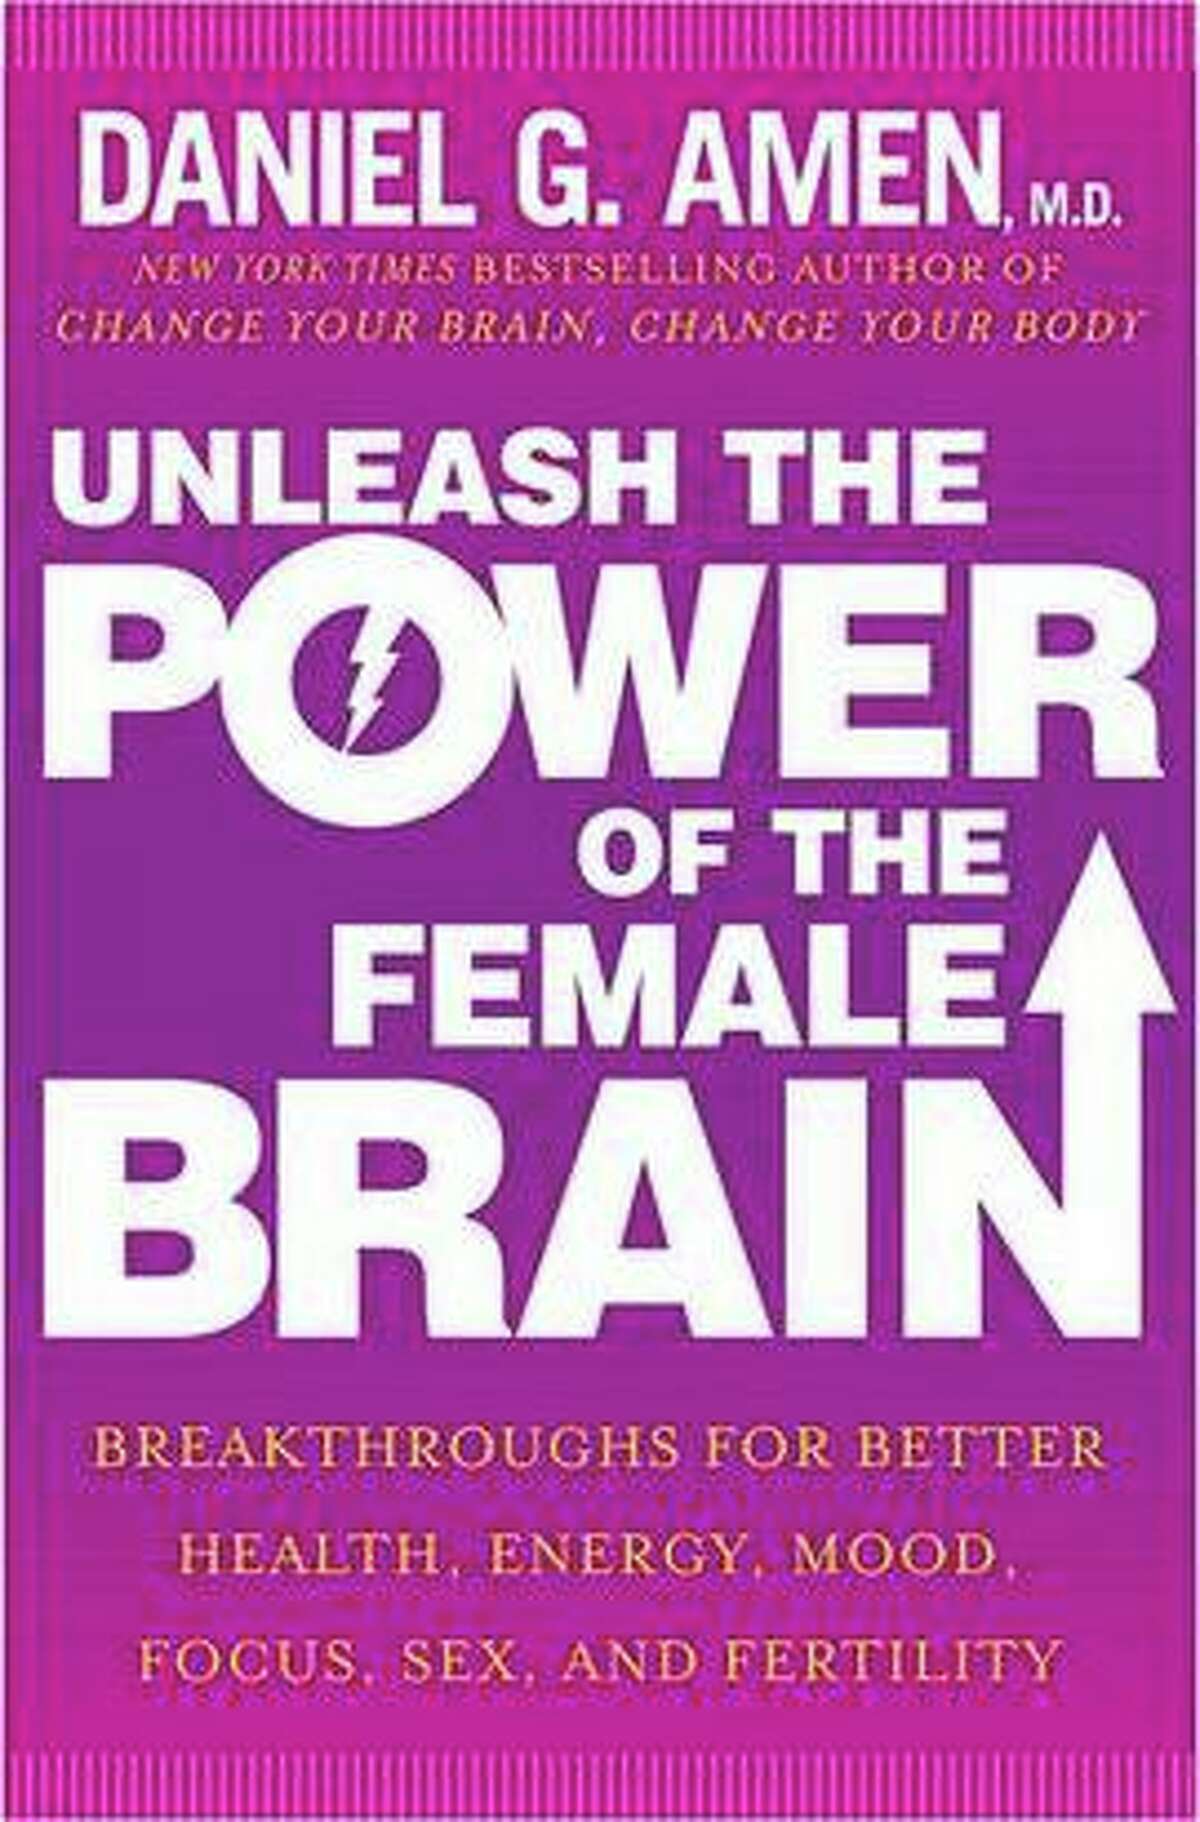 Unleash the Power of the Female Brain, by Daniel G. Amen (Harmony Books; $16; 392 pp.)